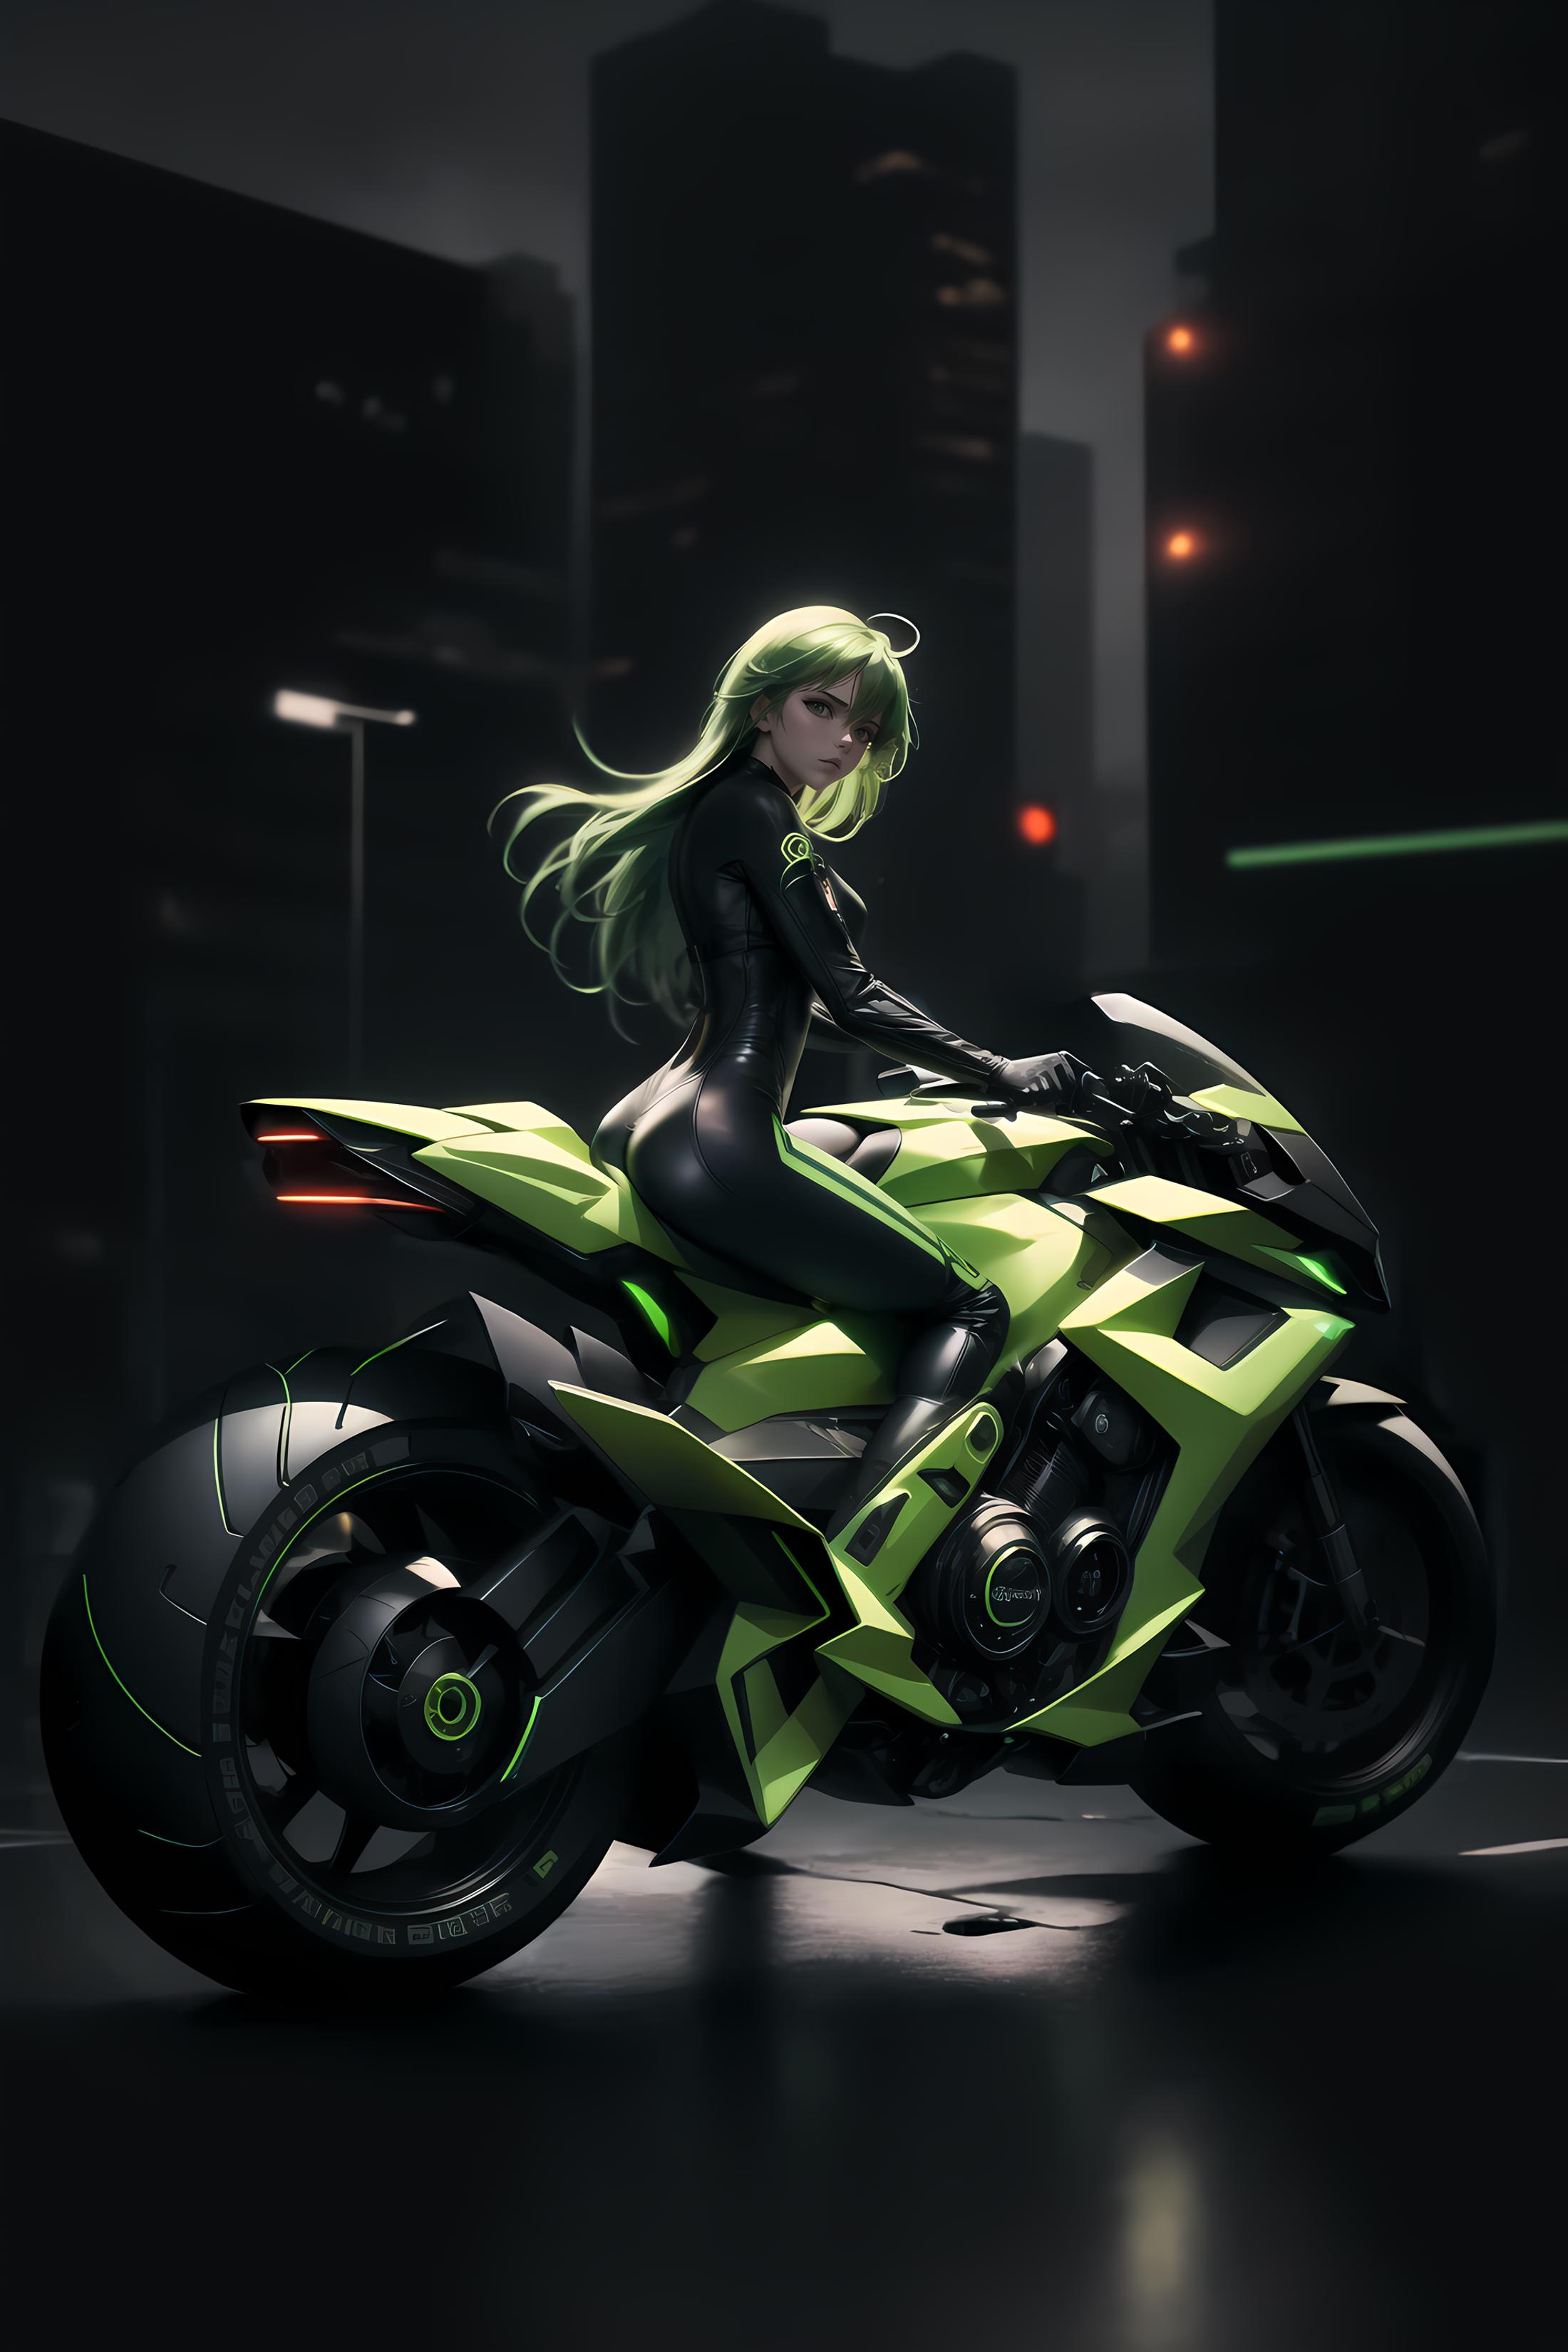 Futuristic Motorcycle Generator Concept image by imCryptix